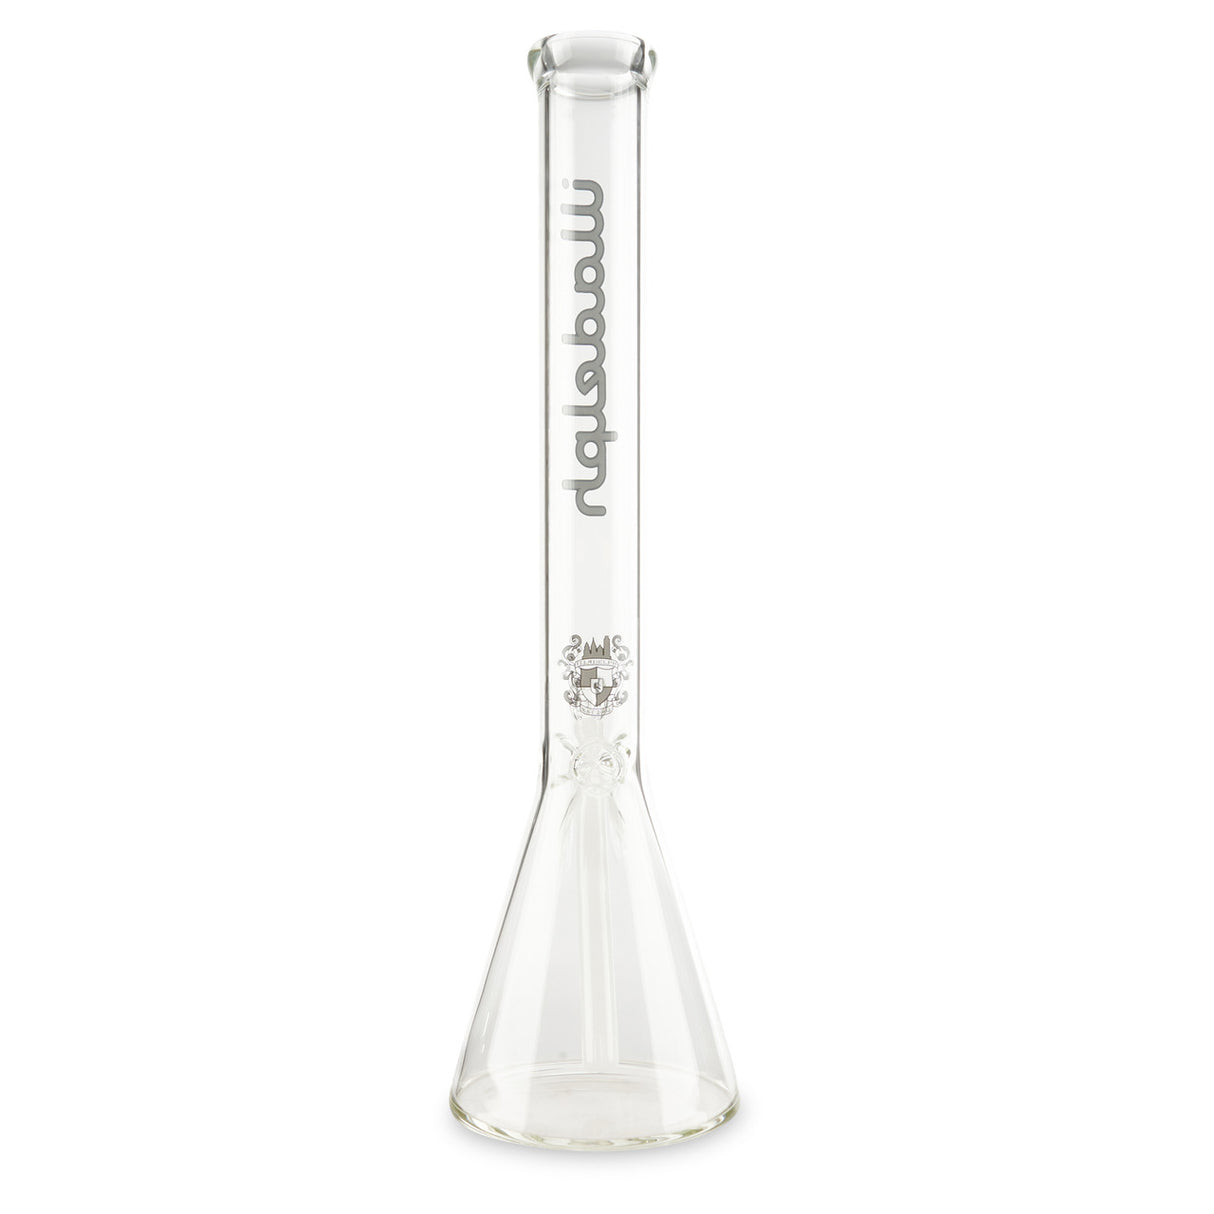 illadelph glass medium beaker gray label at cloud 9 smoke co